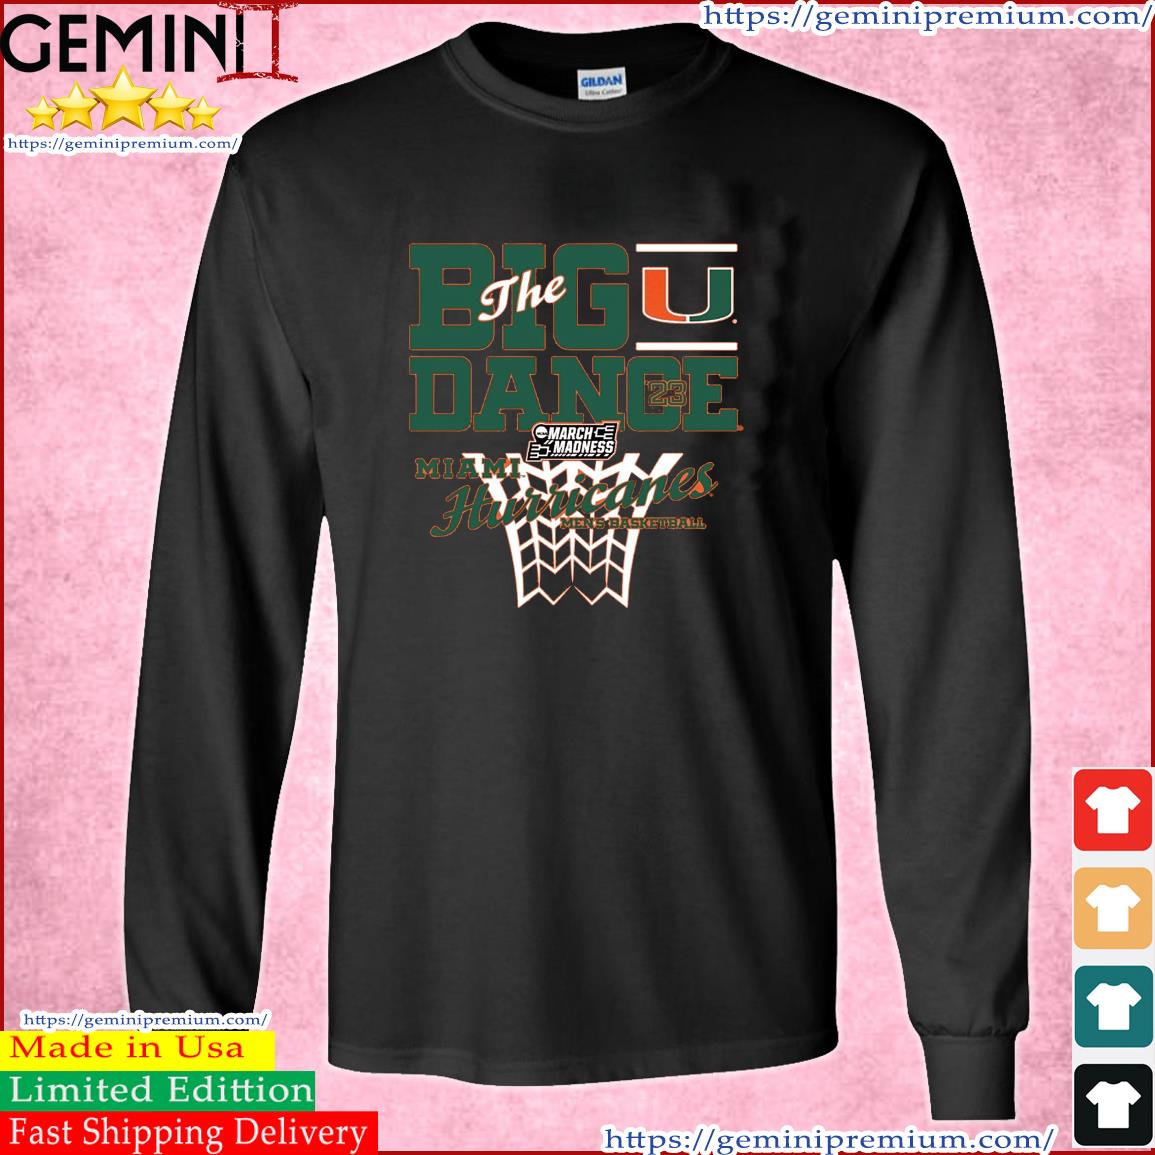 University of Miami Men's Basketball 2023 NCAA March Madness Tournament Bound Shirt Long Sleeve Tee